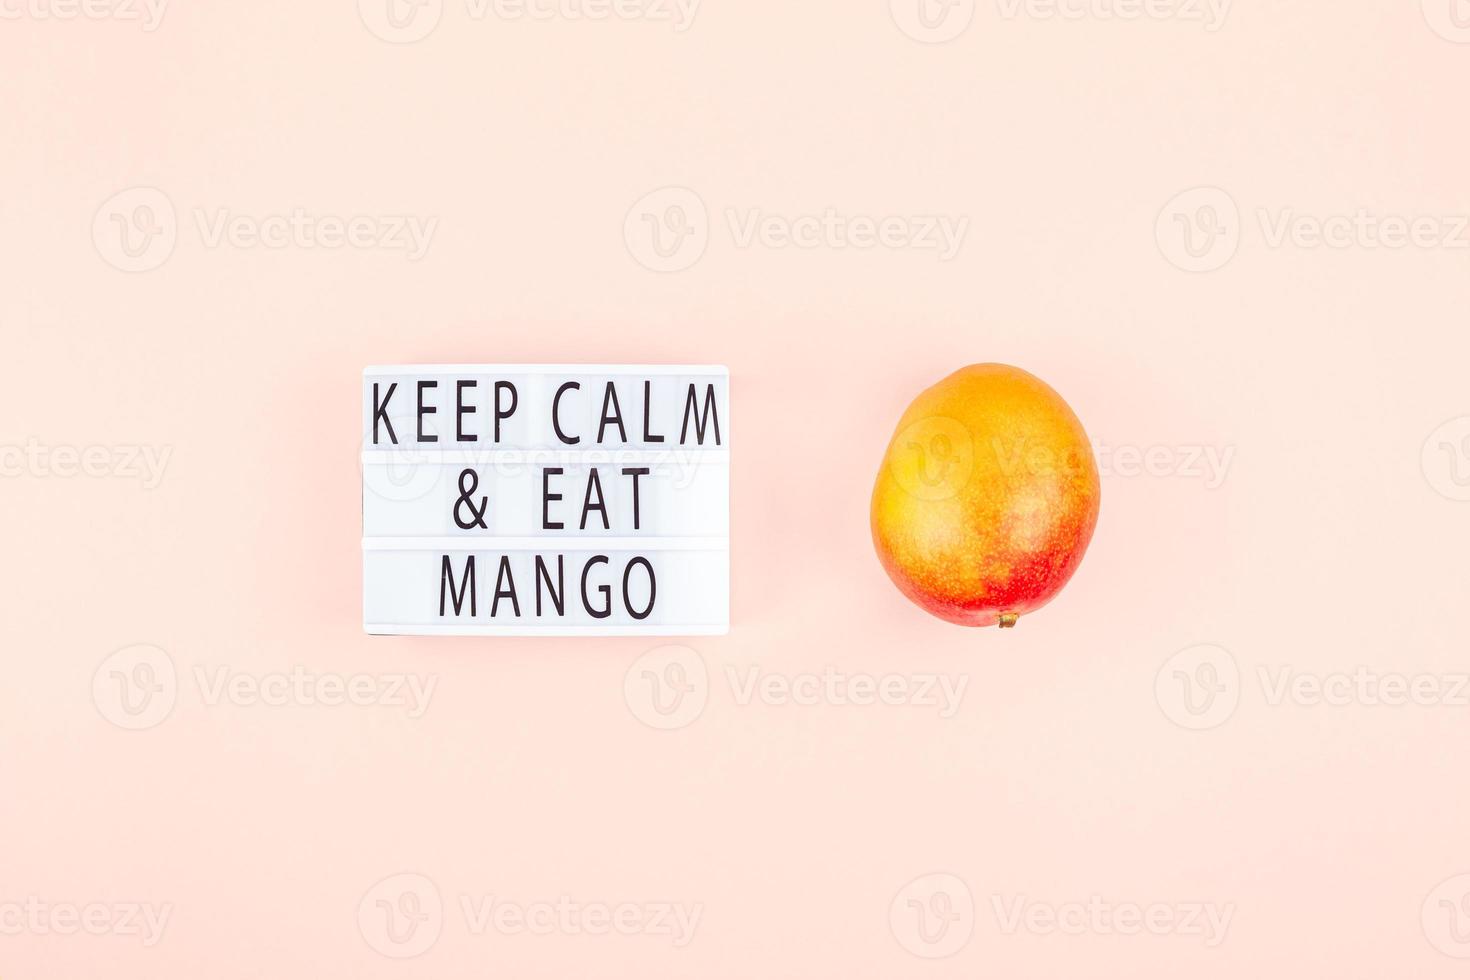 Mango fruit in creative composition photo